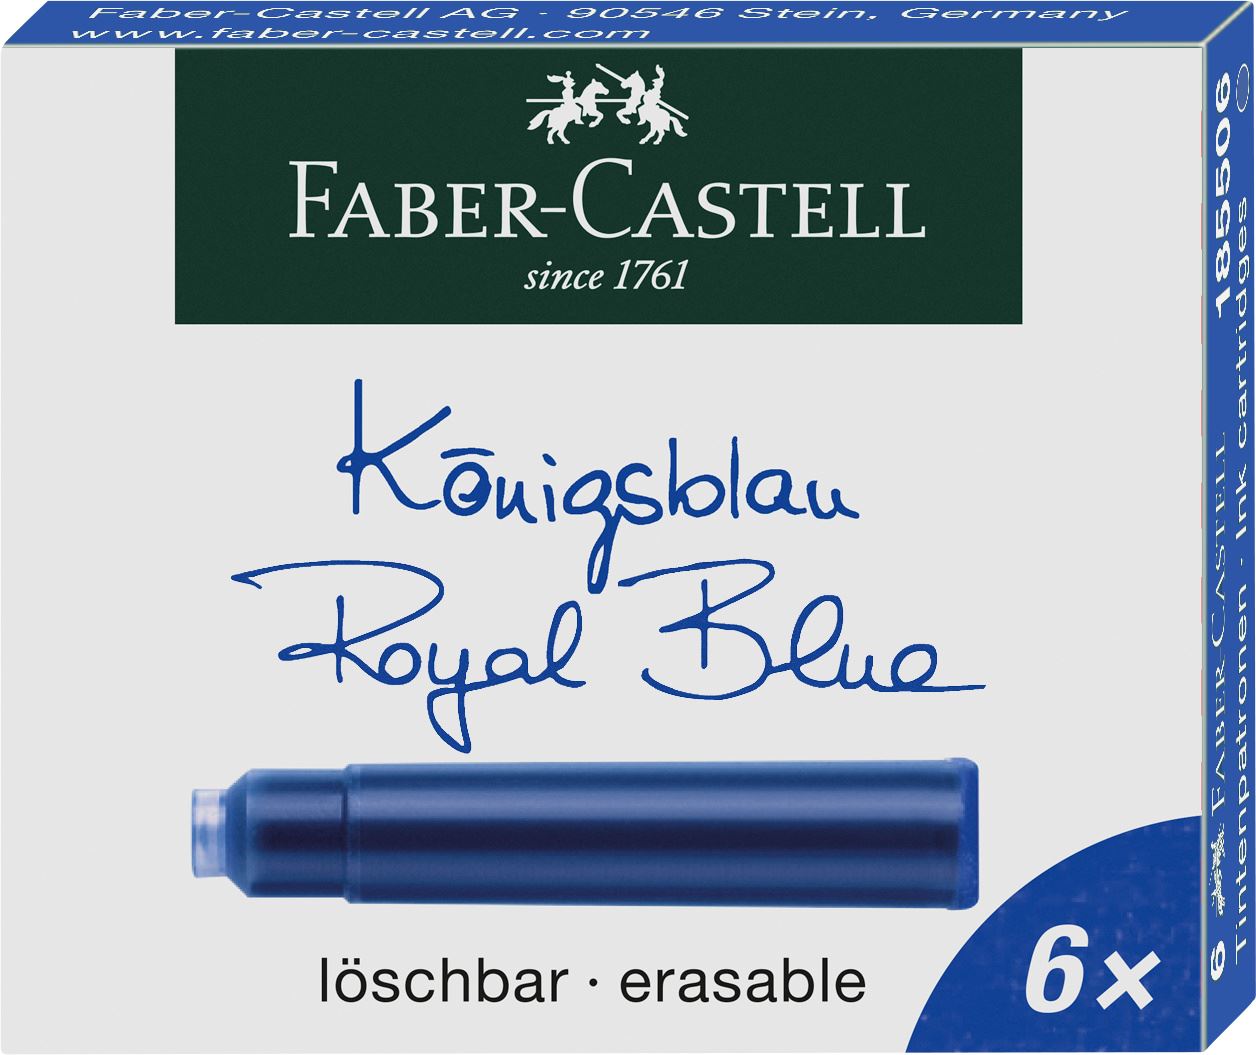 Faber-Castell - 6 ανταλλακτικές αμπούλες πένας, μπλε